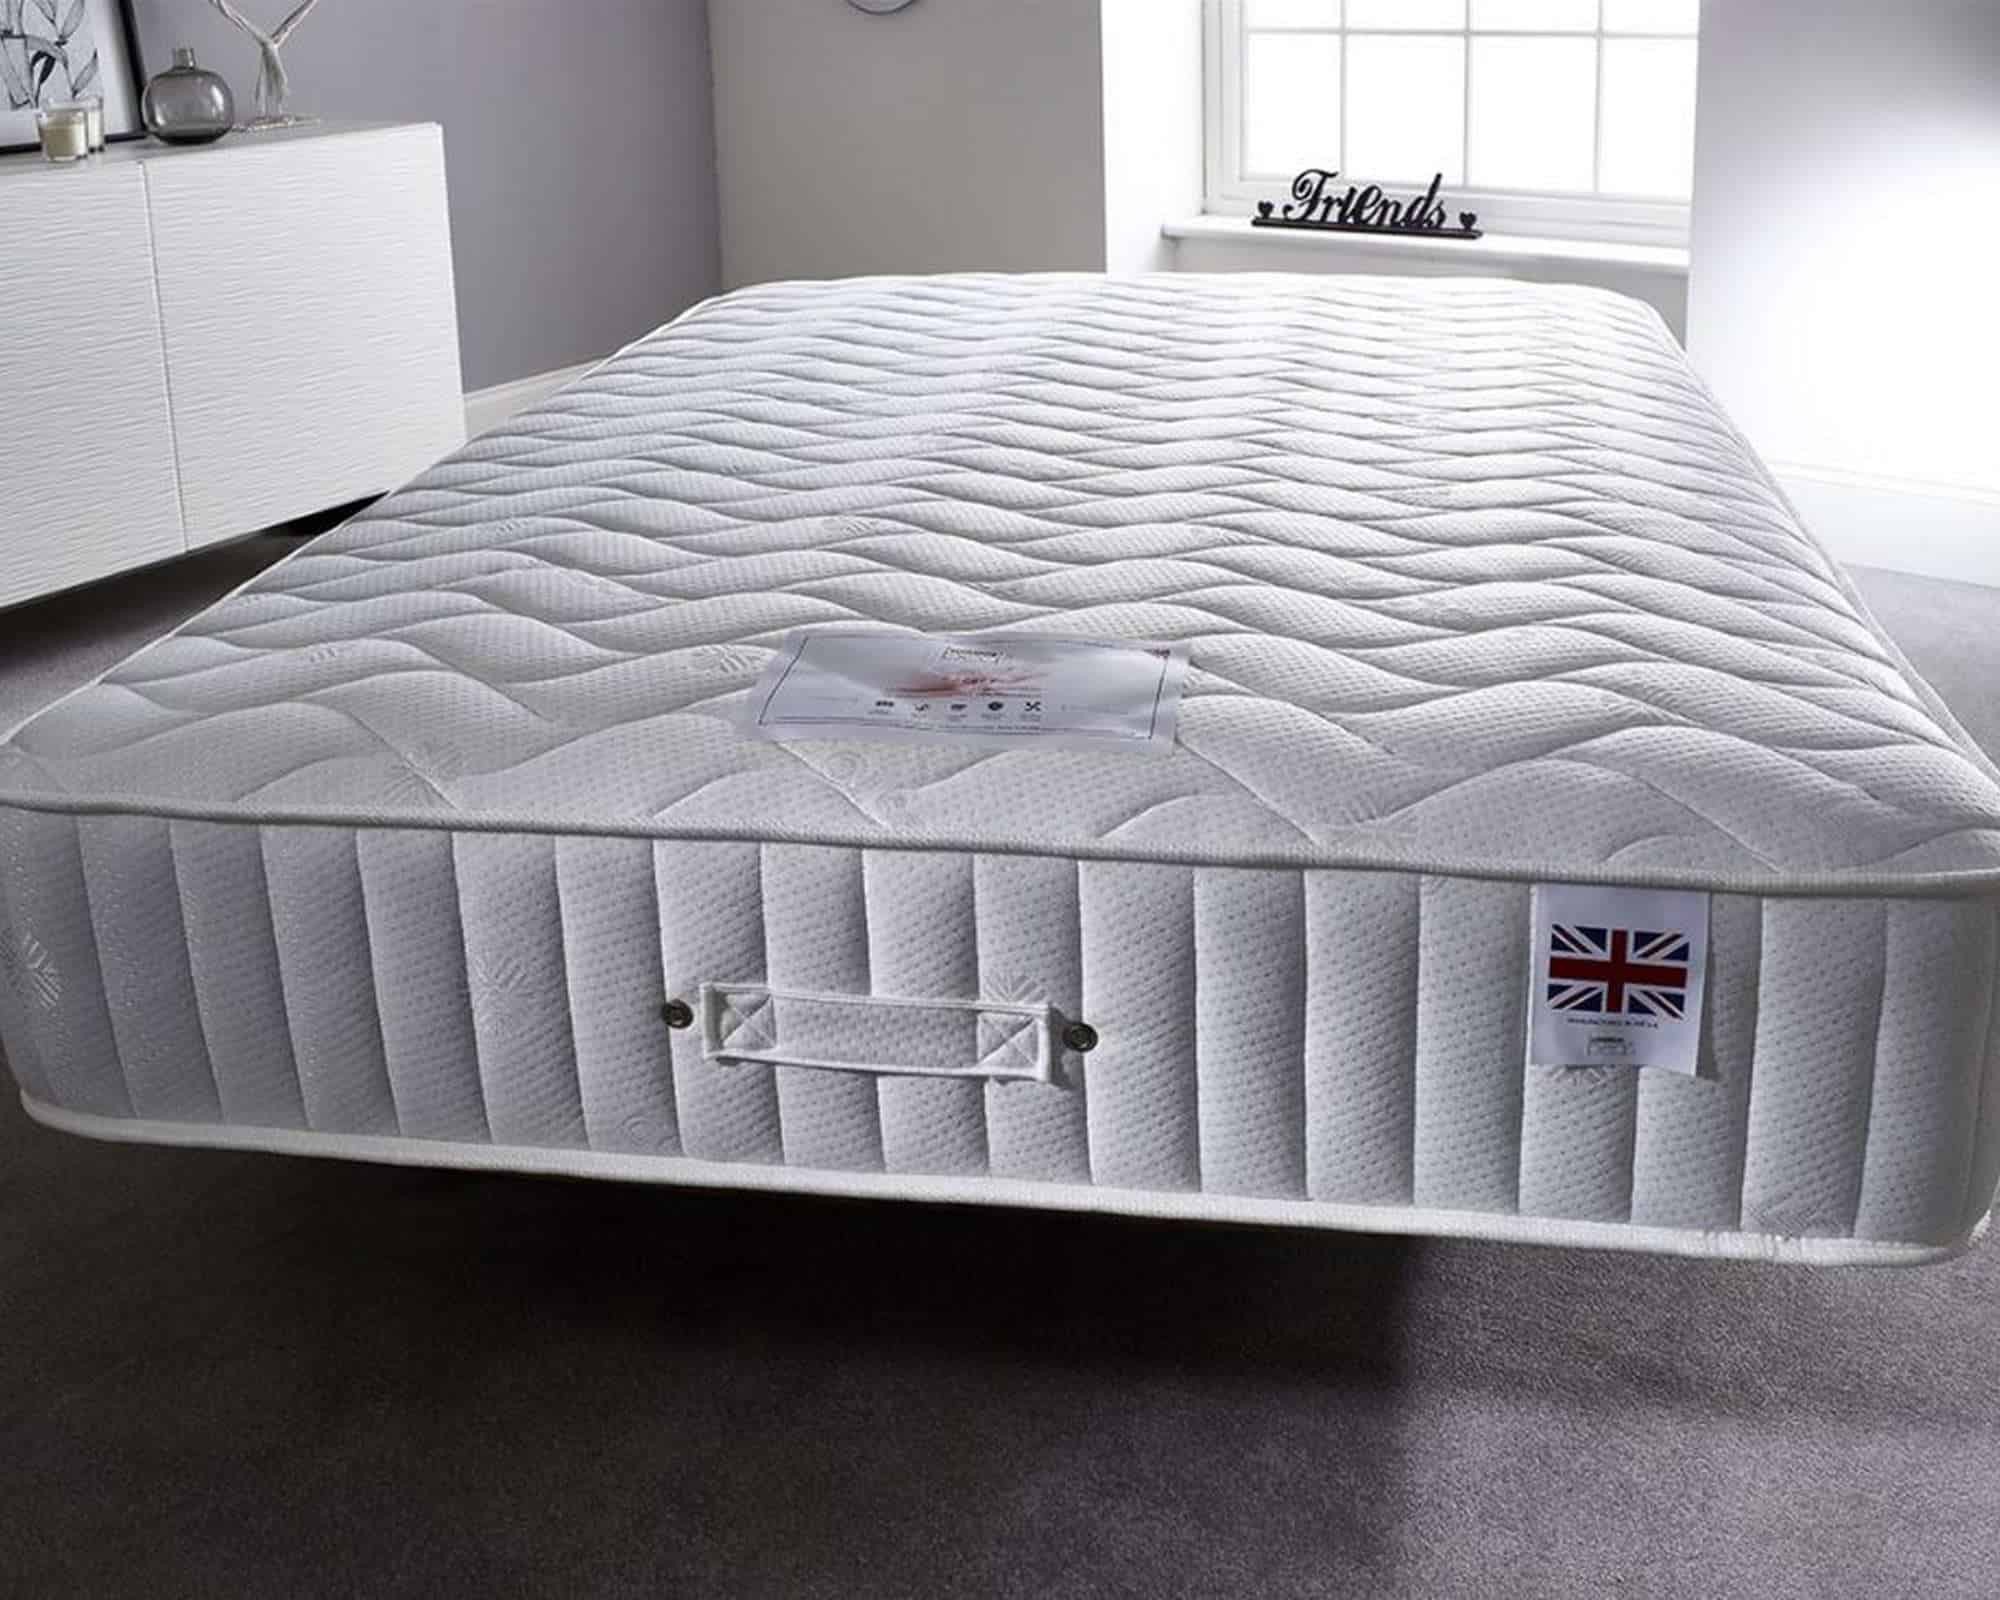 3000 washington pocket mattress reviews